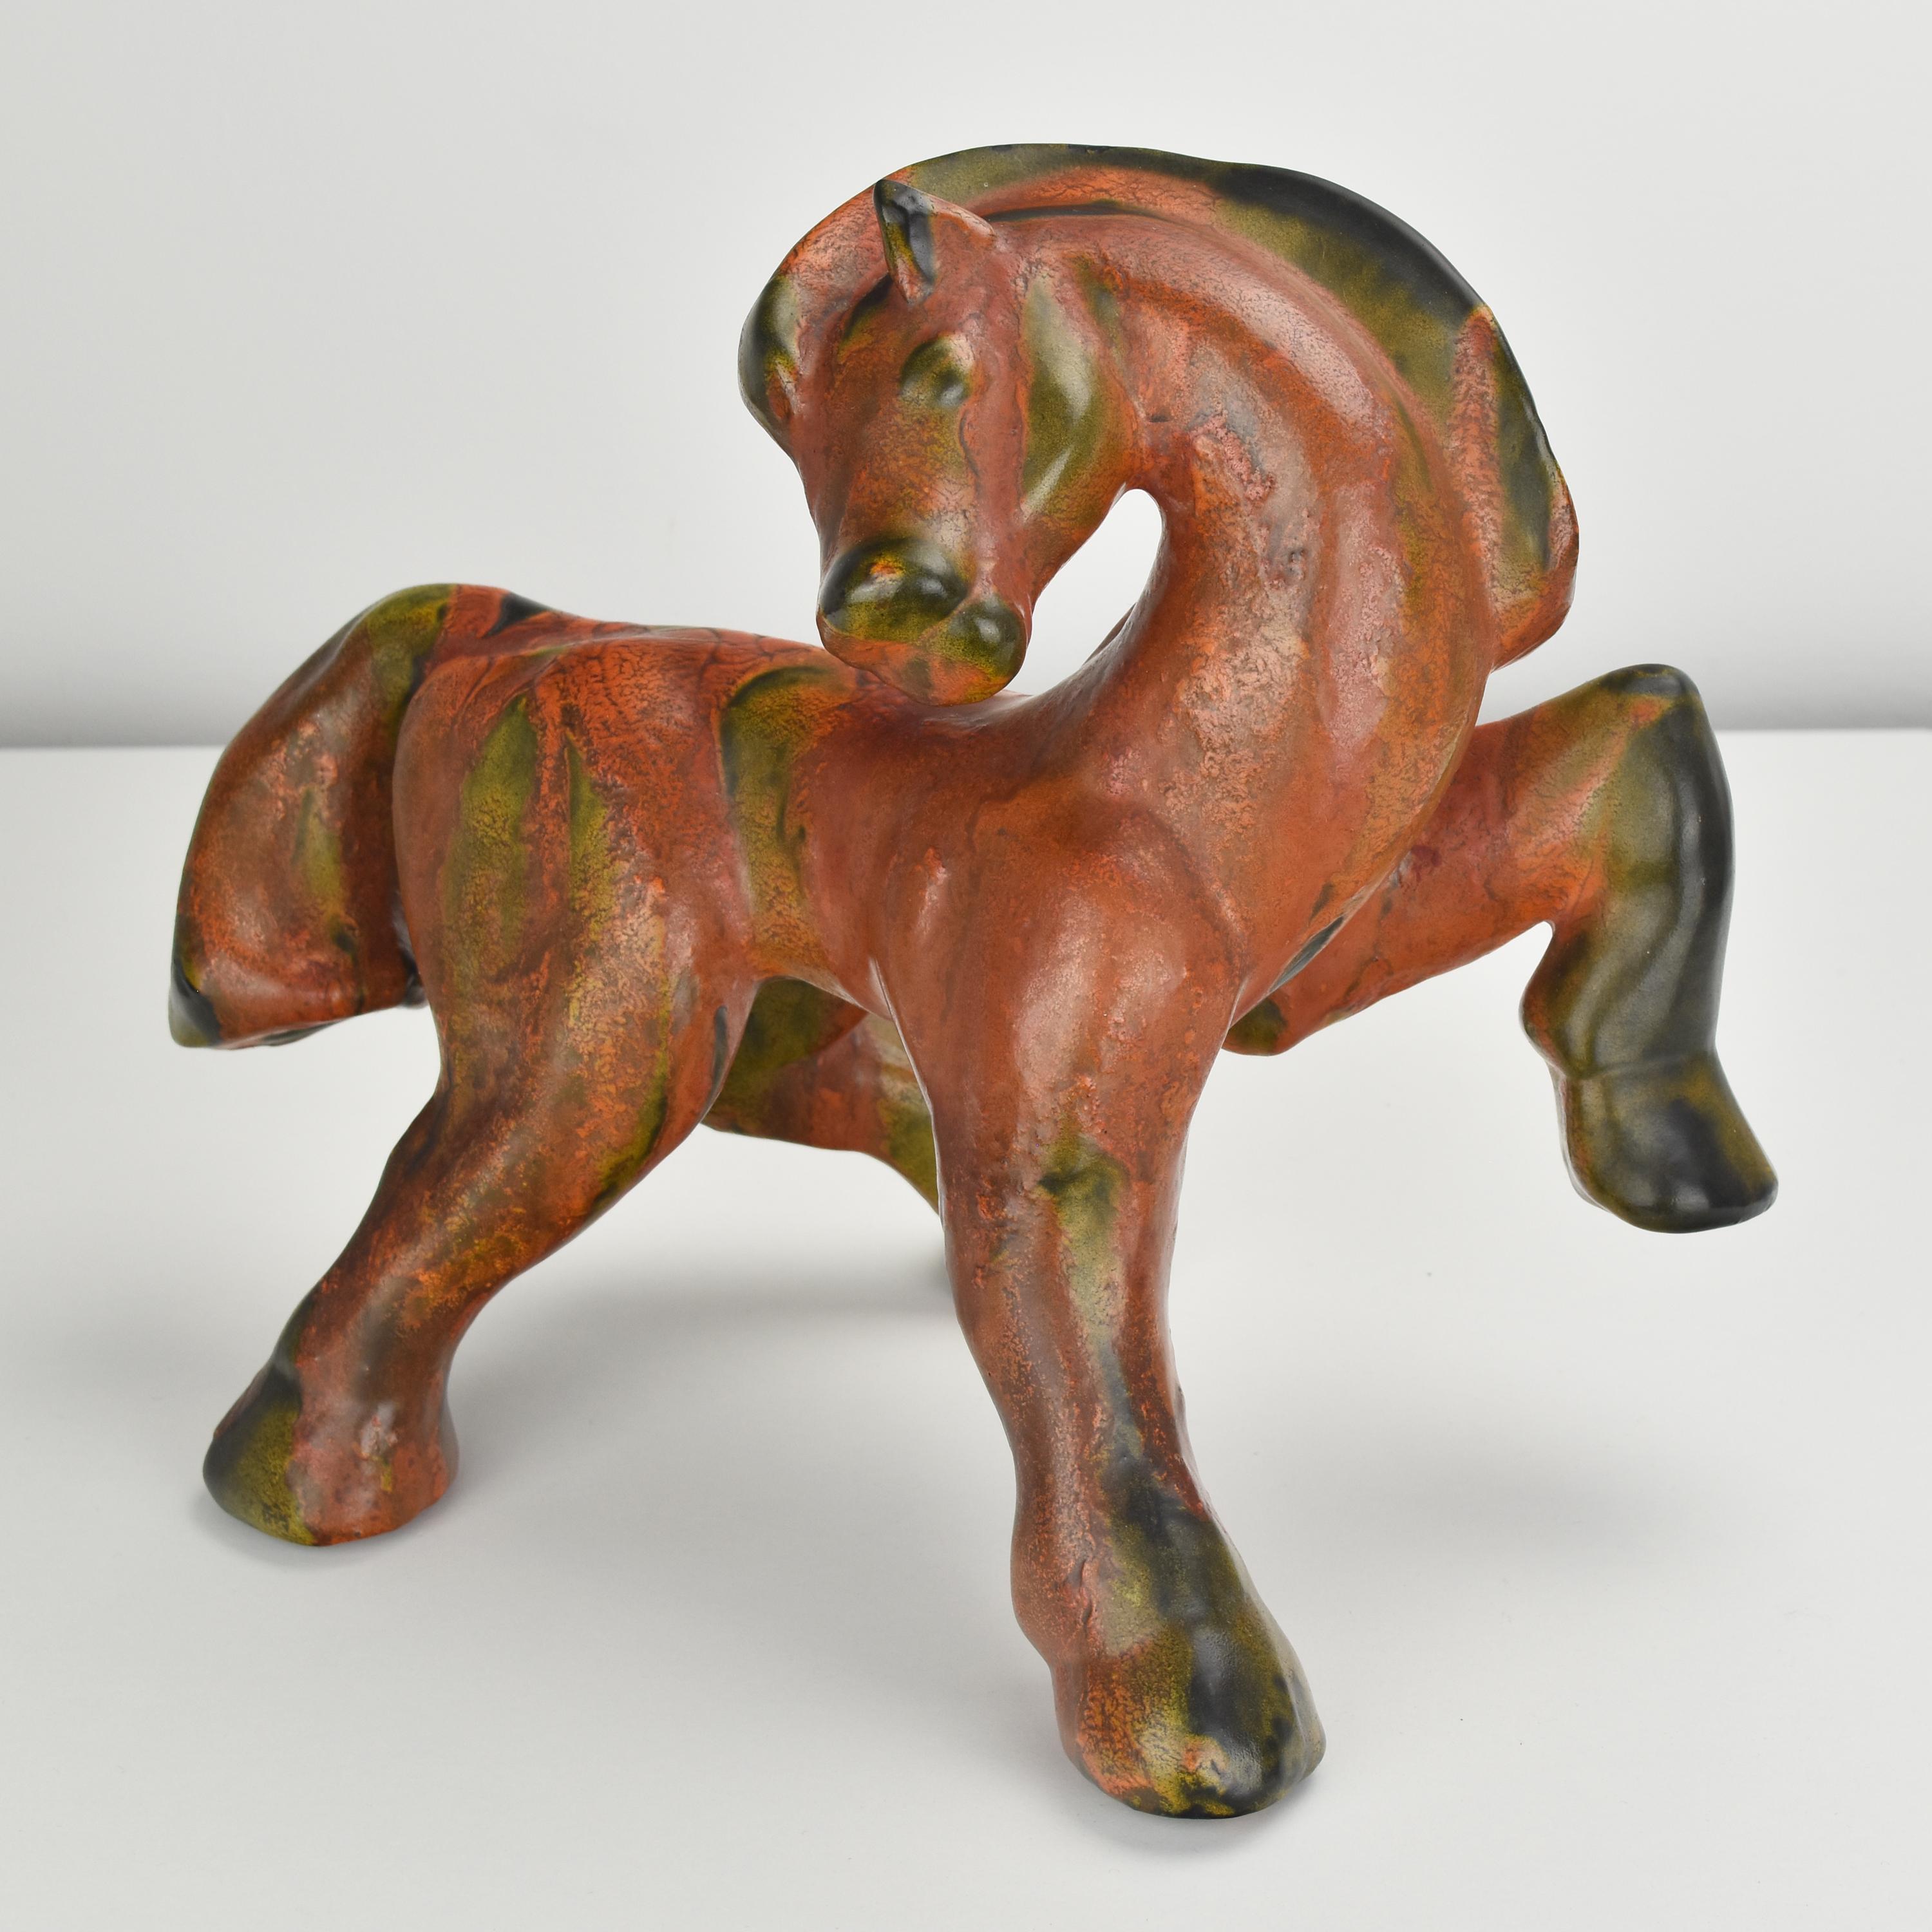 German Art Deco Pottery Ceramic Horse Sculpture Figurine After Franz Marc For Sale 2